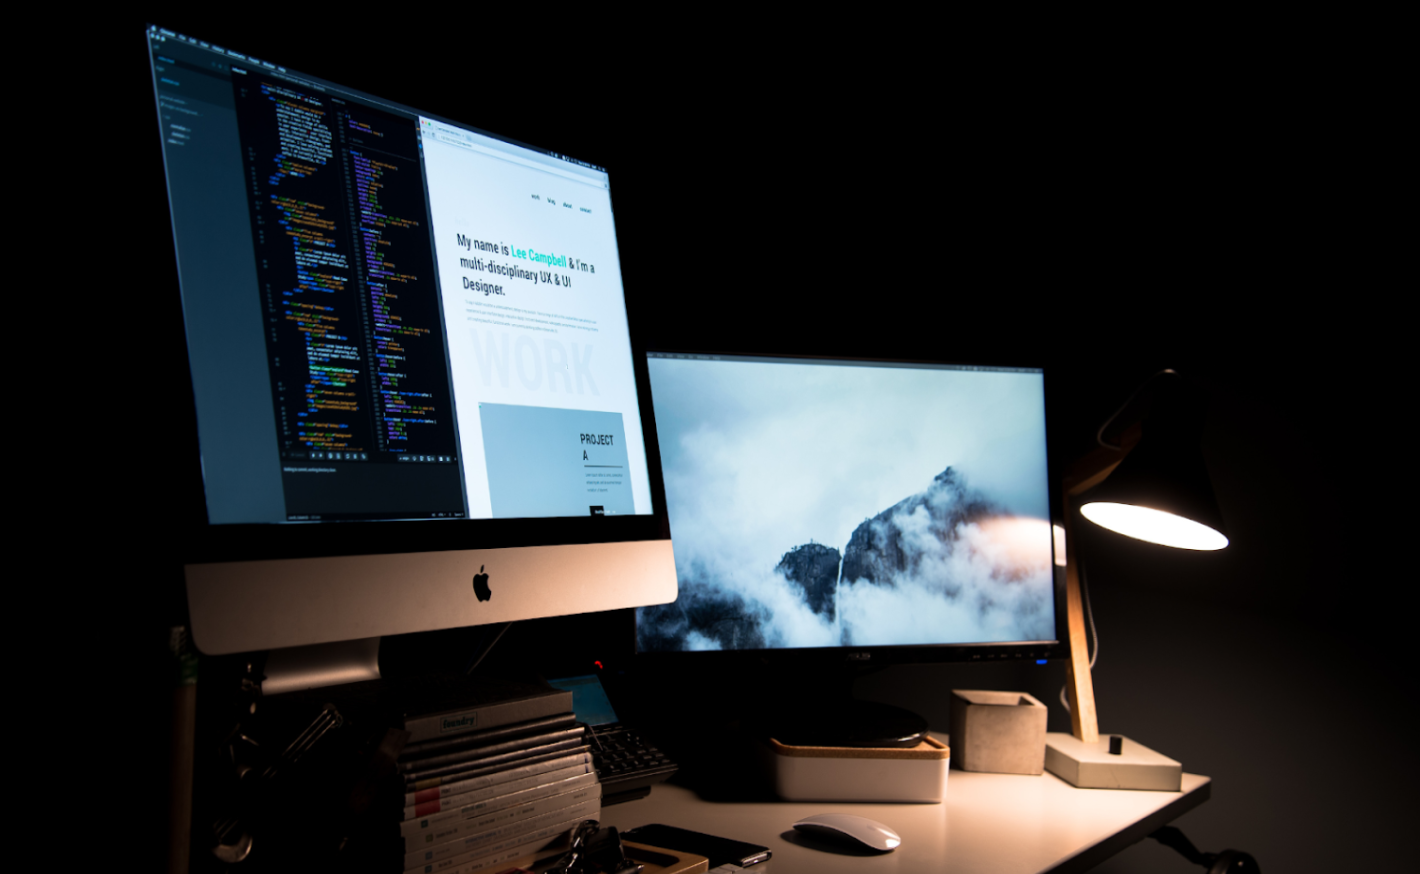 Computer screens on a desk in the dark, open source design